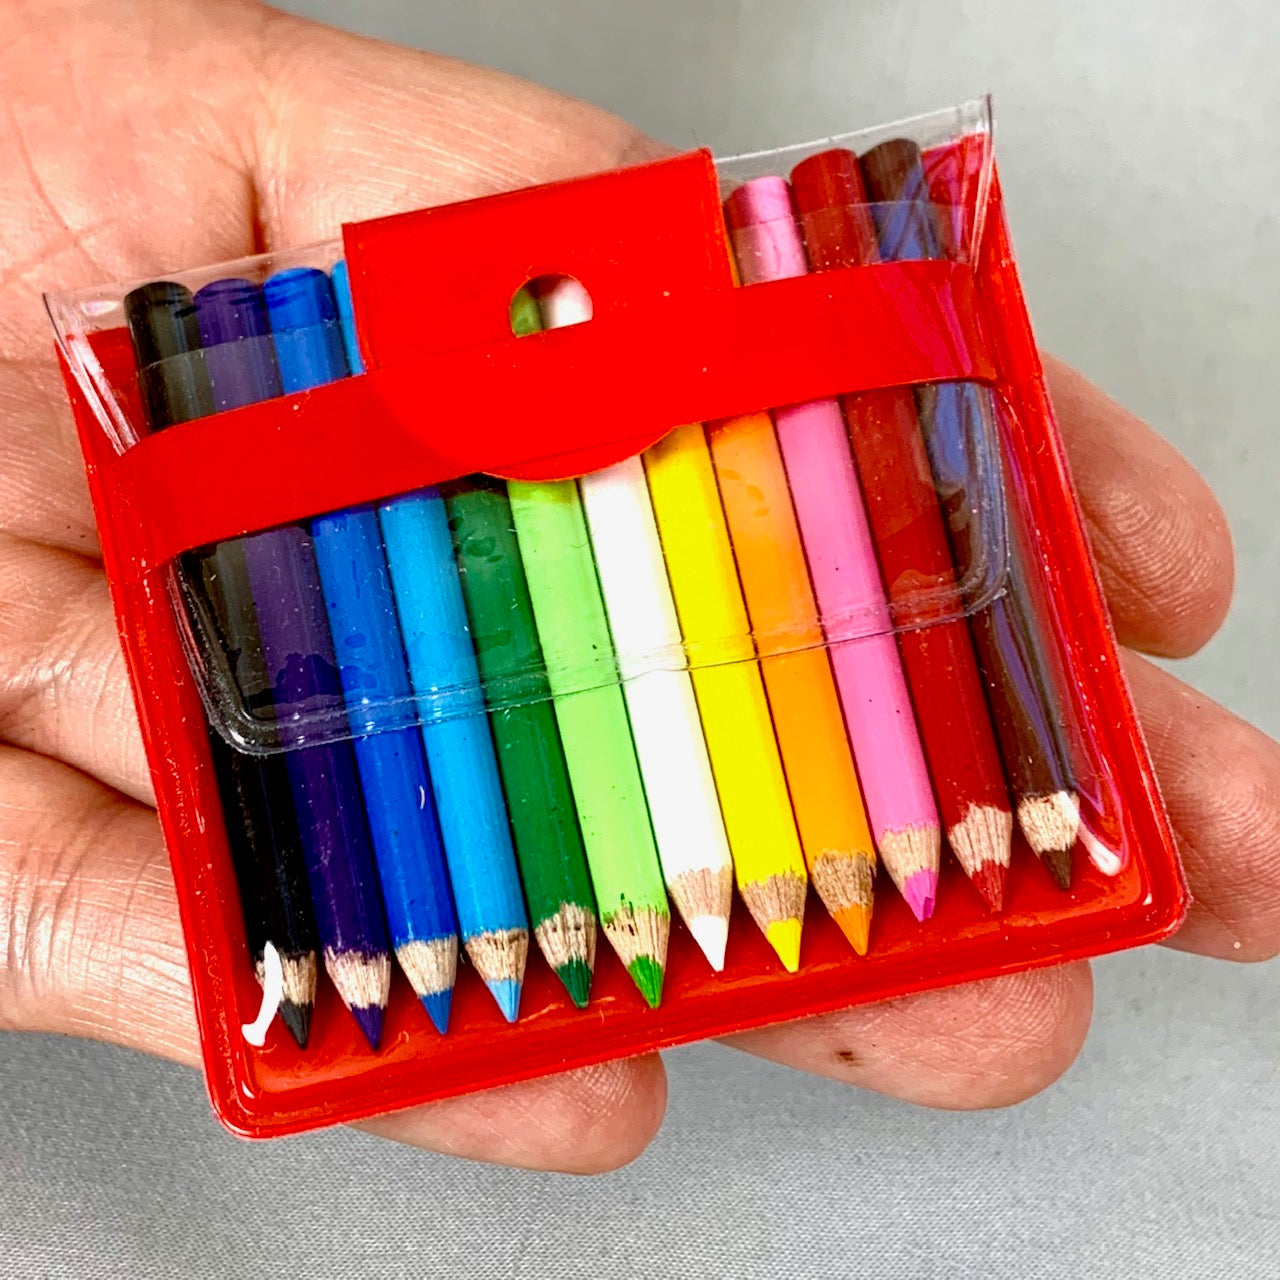 Mini Colored Pencils in Pouch P.O.P. Display